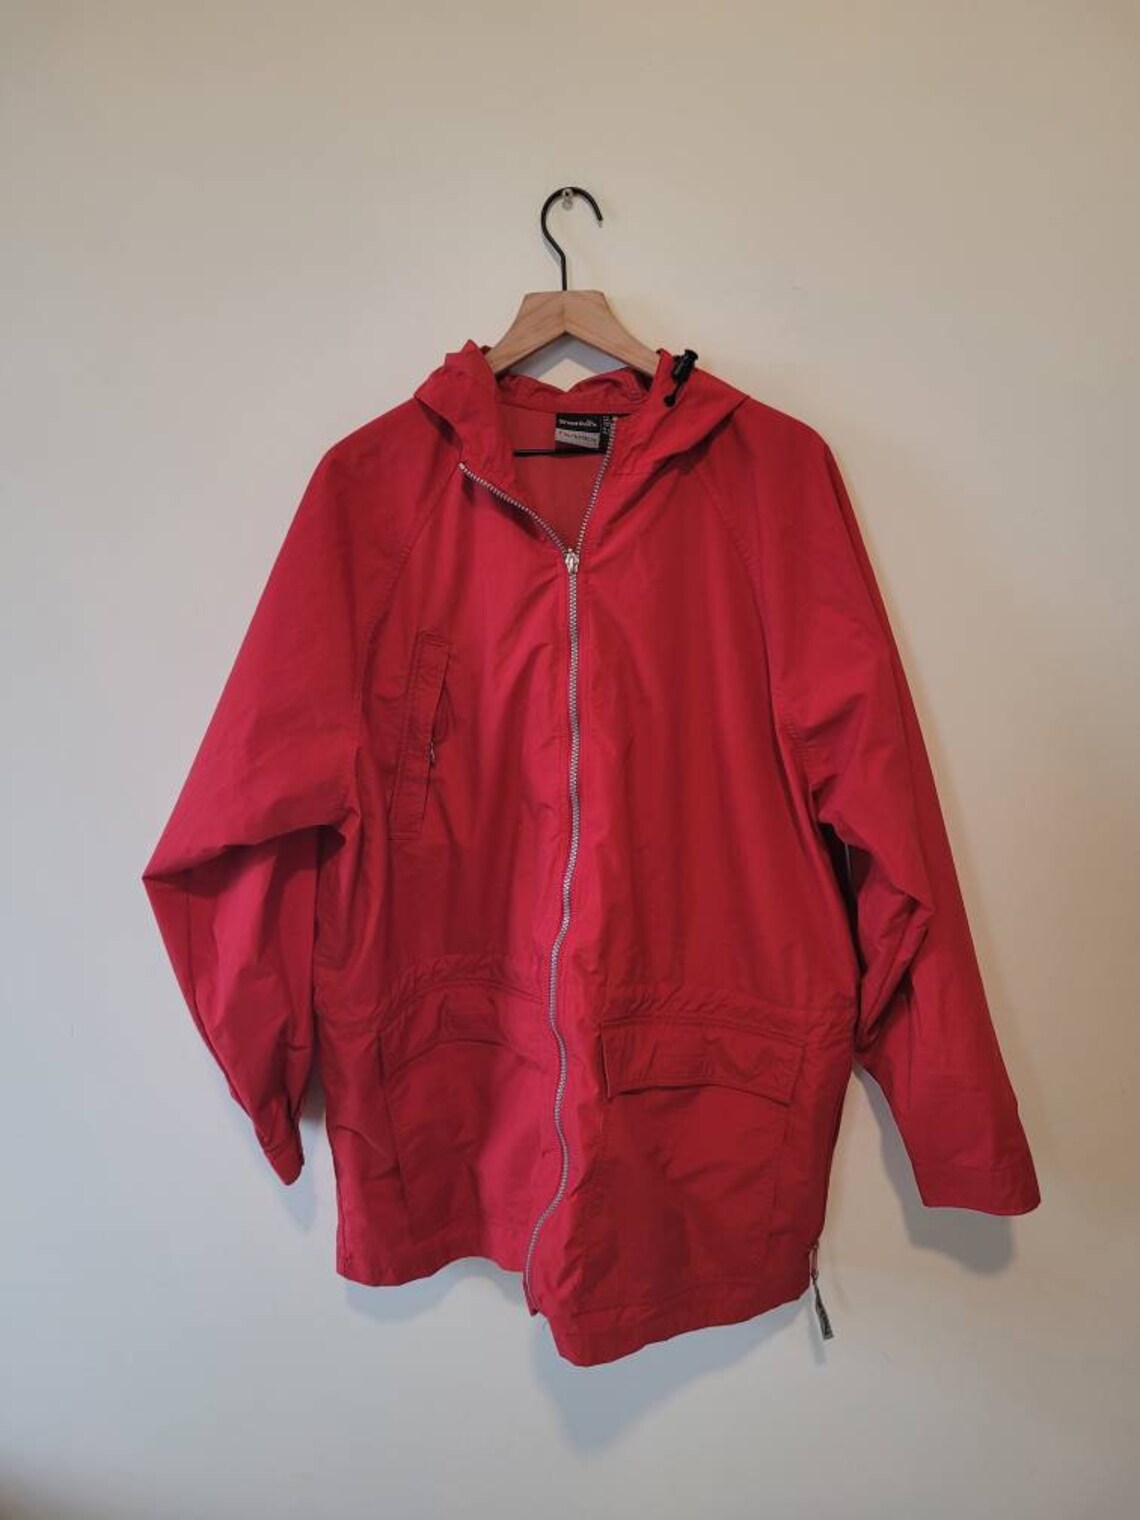 Shed Rain zip up lightweight Rain jacket with hood | Etsy